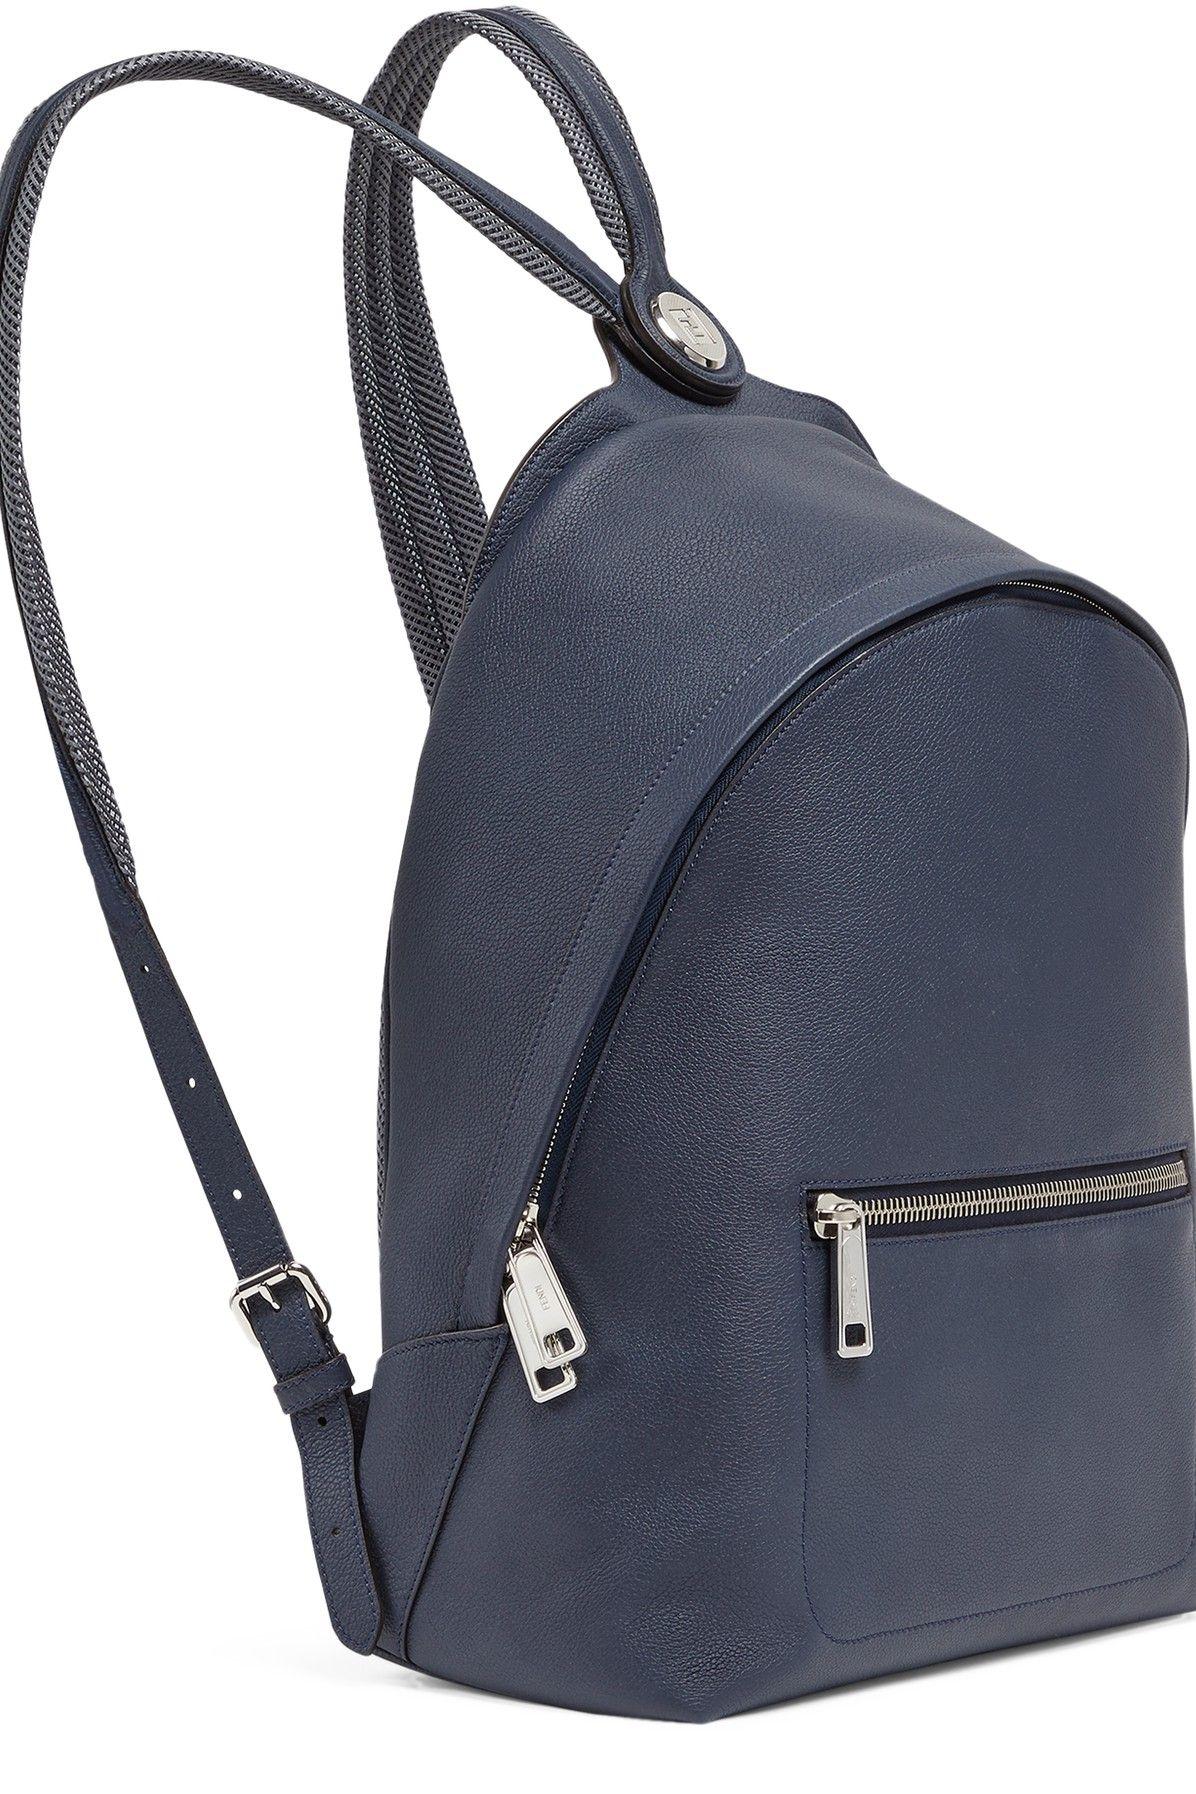 Fendi Dark Leather Backpack in Blue for Men | Lyst